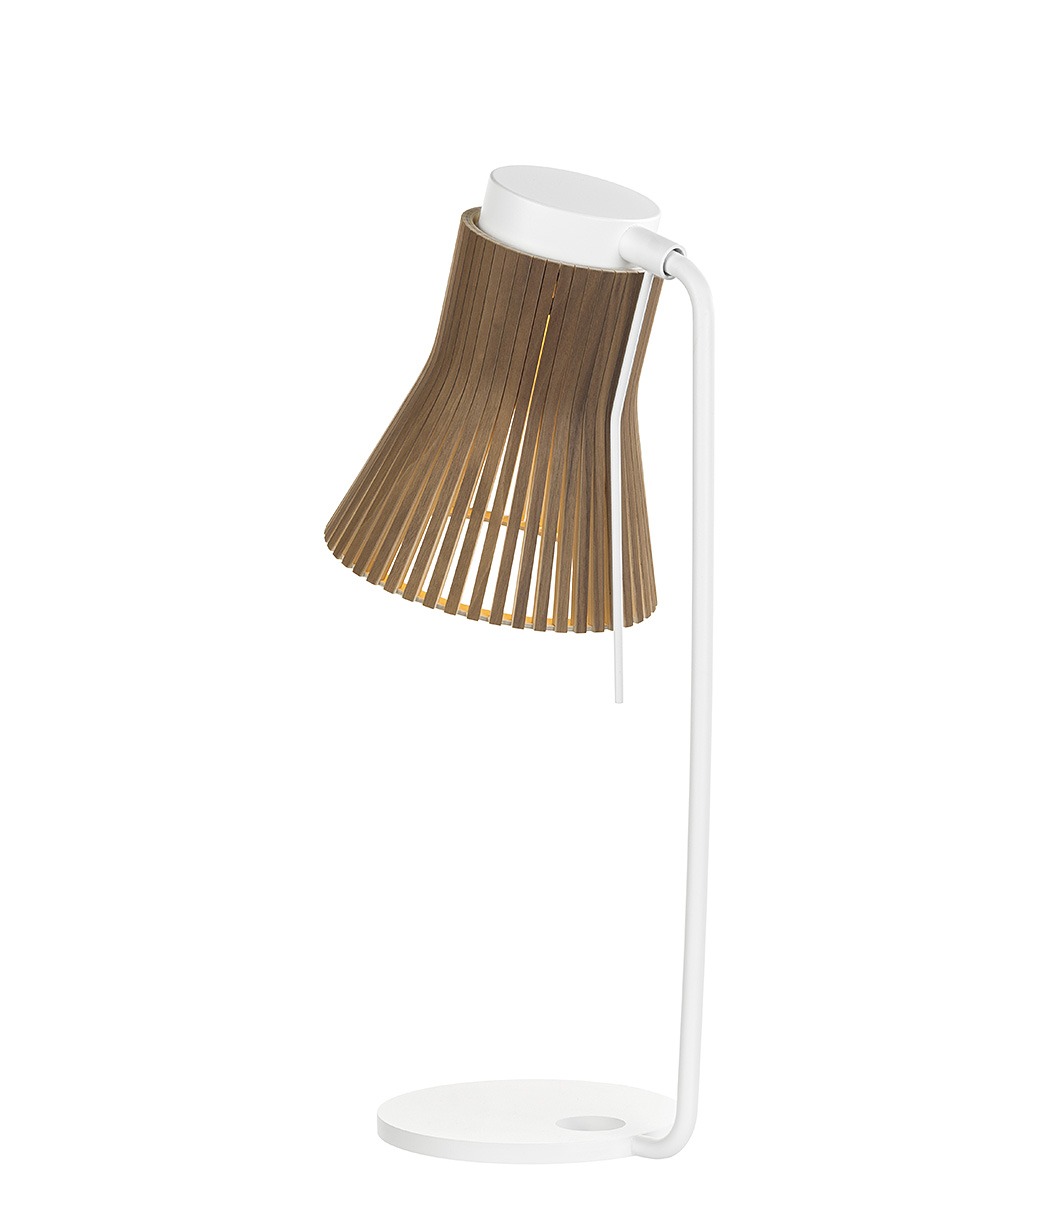 Petite 4620 table lamp is available in walnut veneer